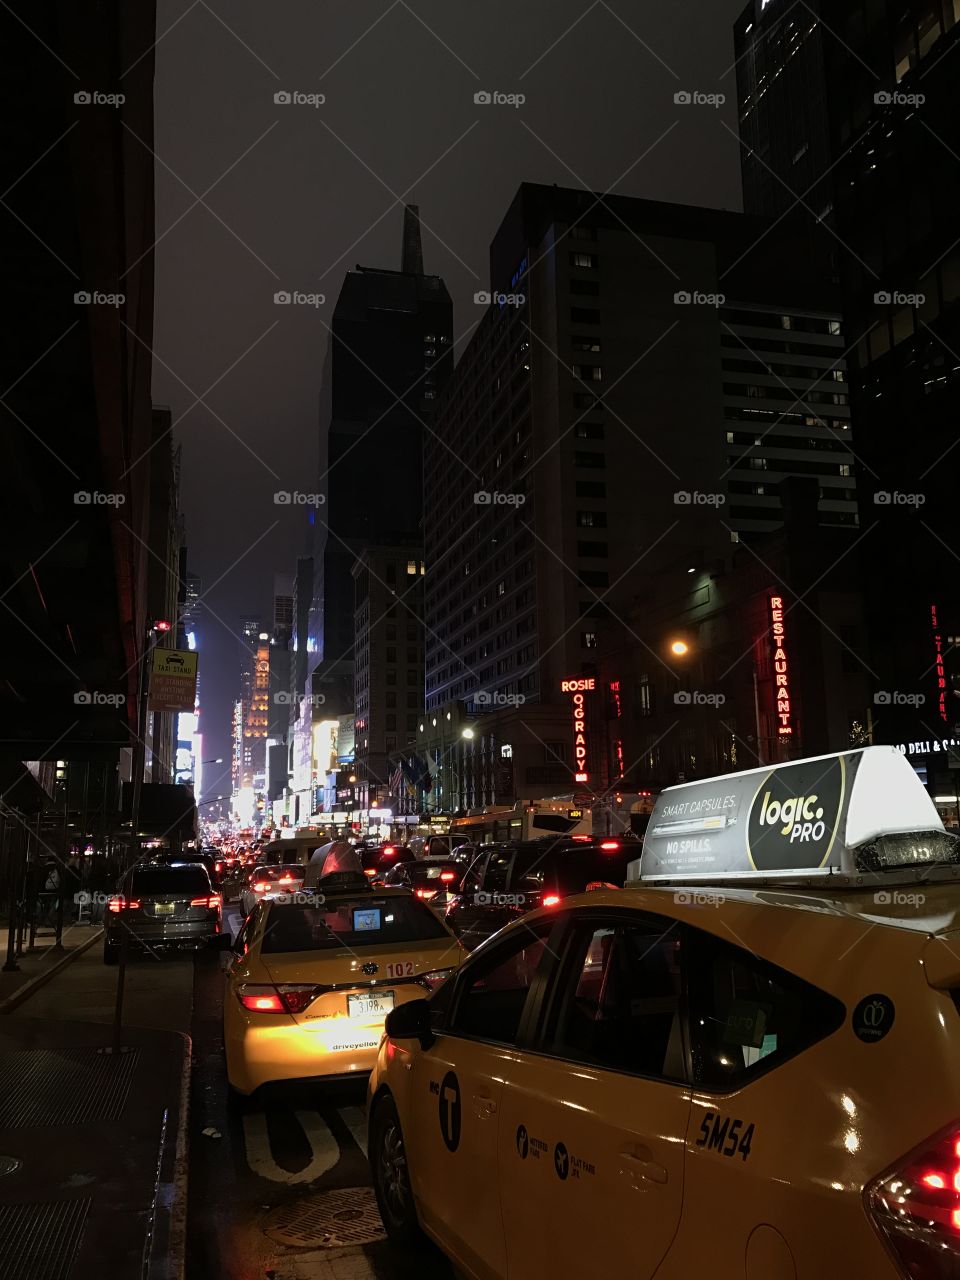 New York in the night
